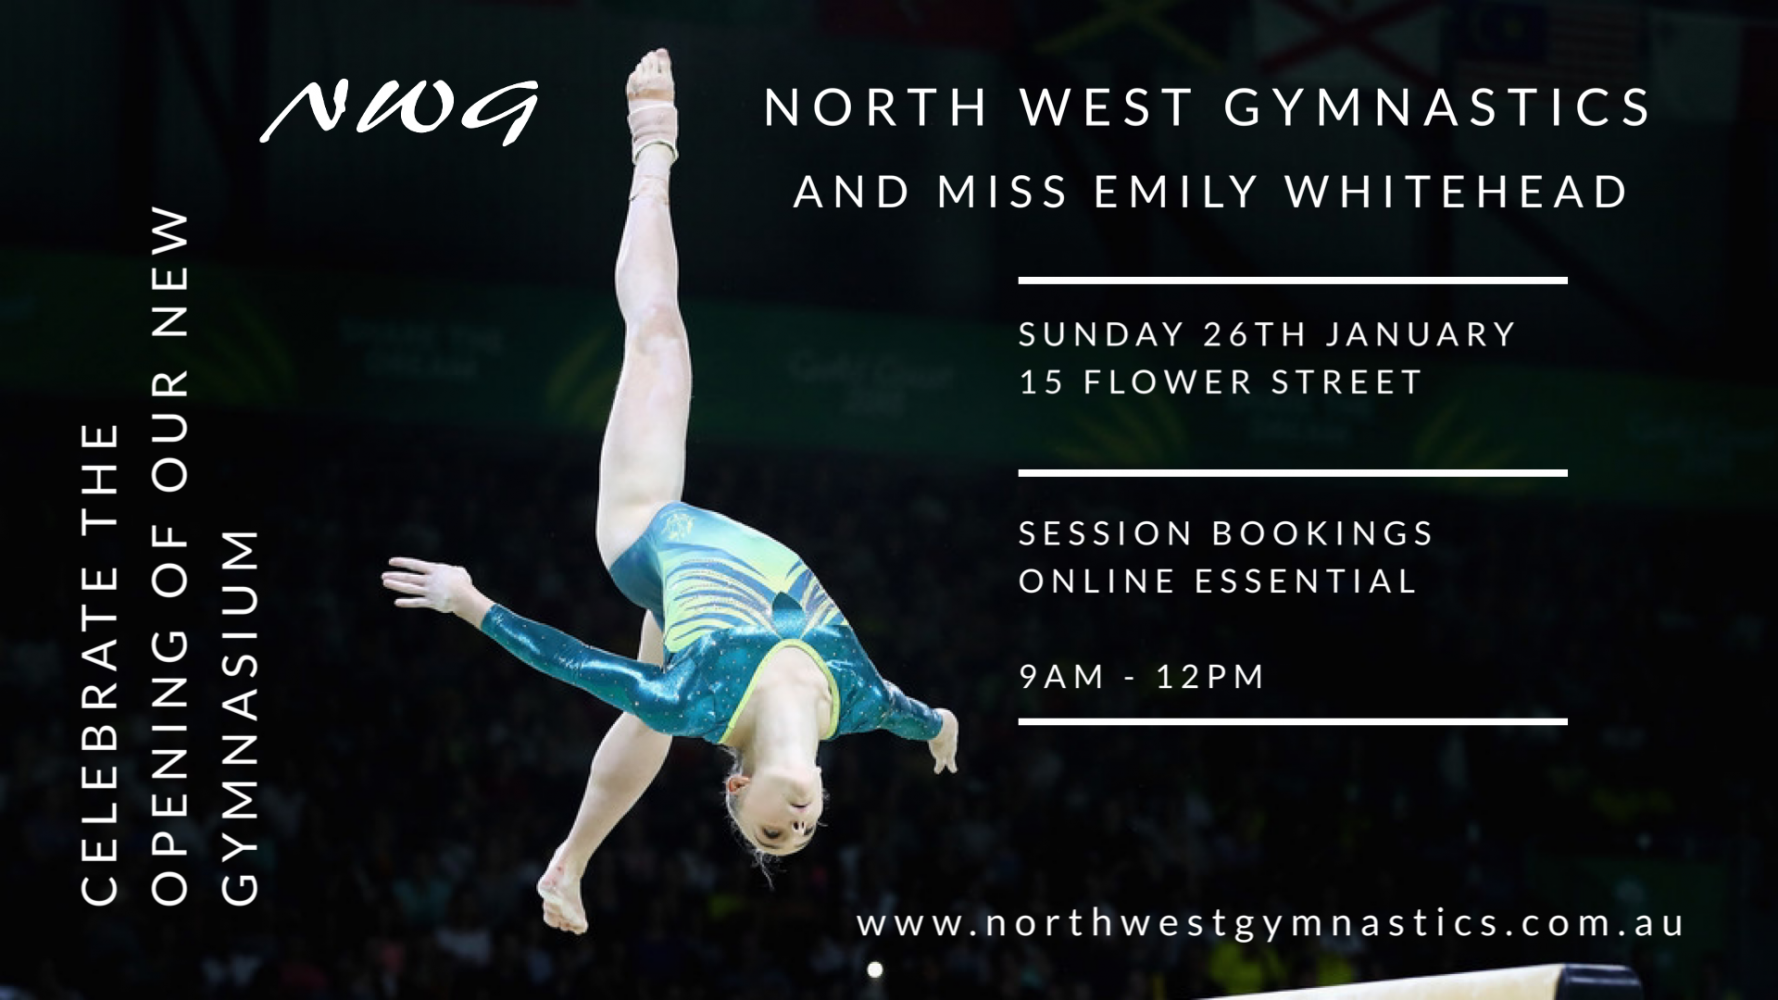 NWG North West Gymnastics Emily Whitehead Gymnasium Opening Event